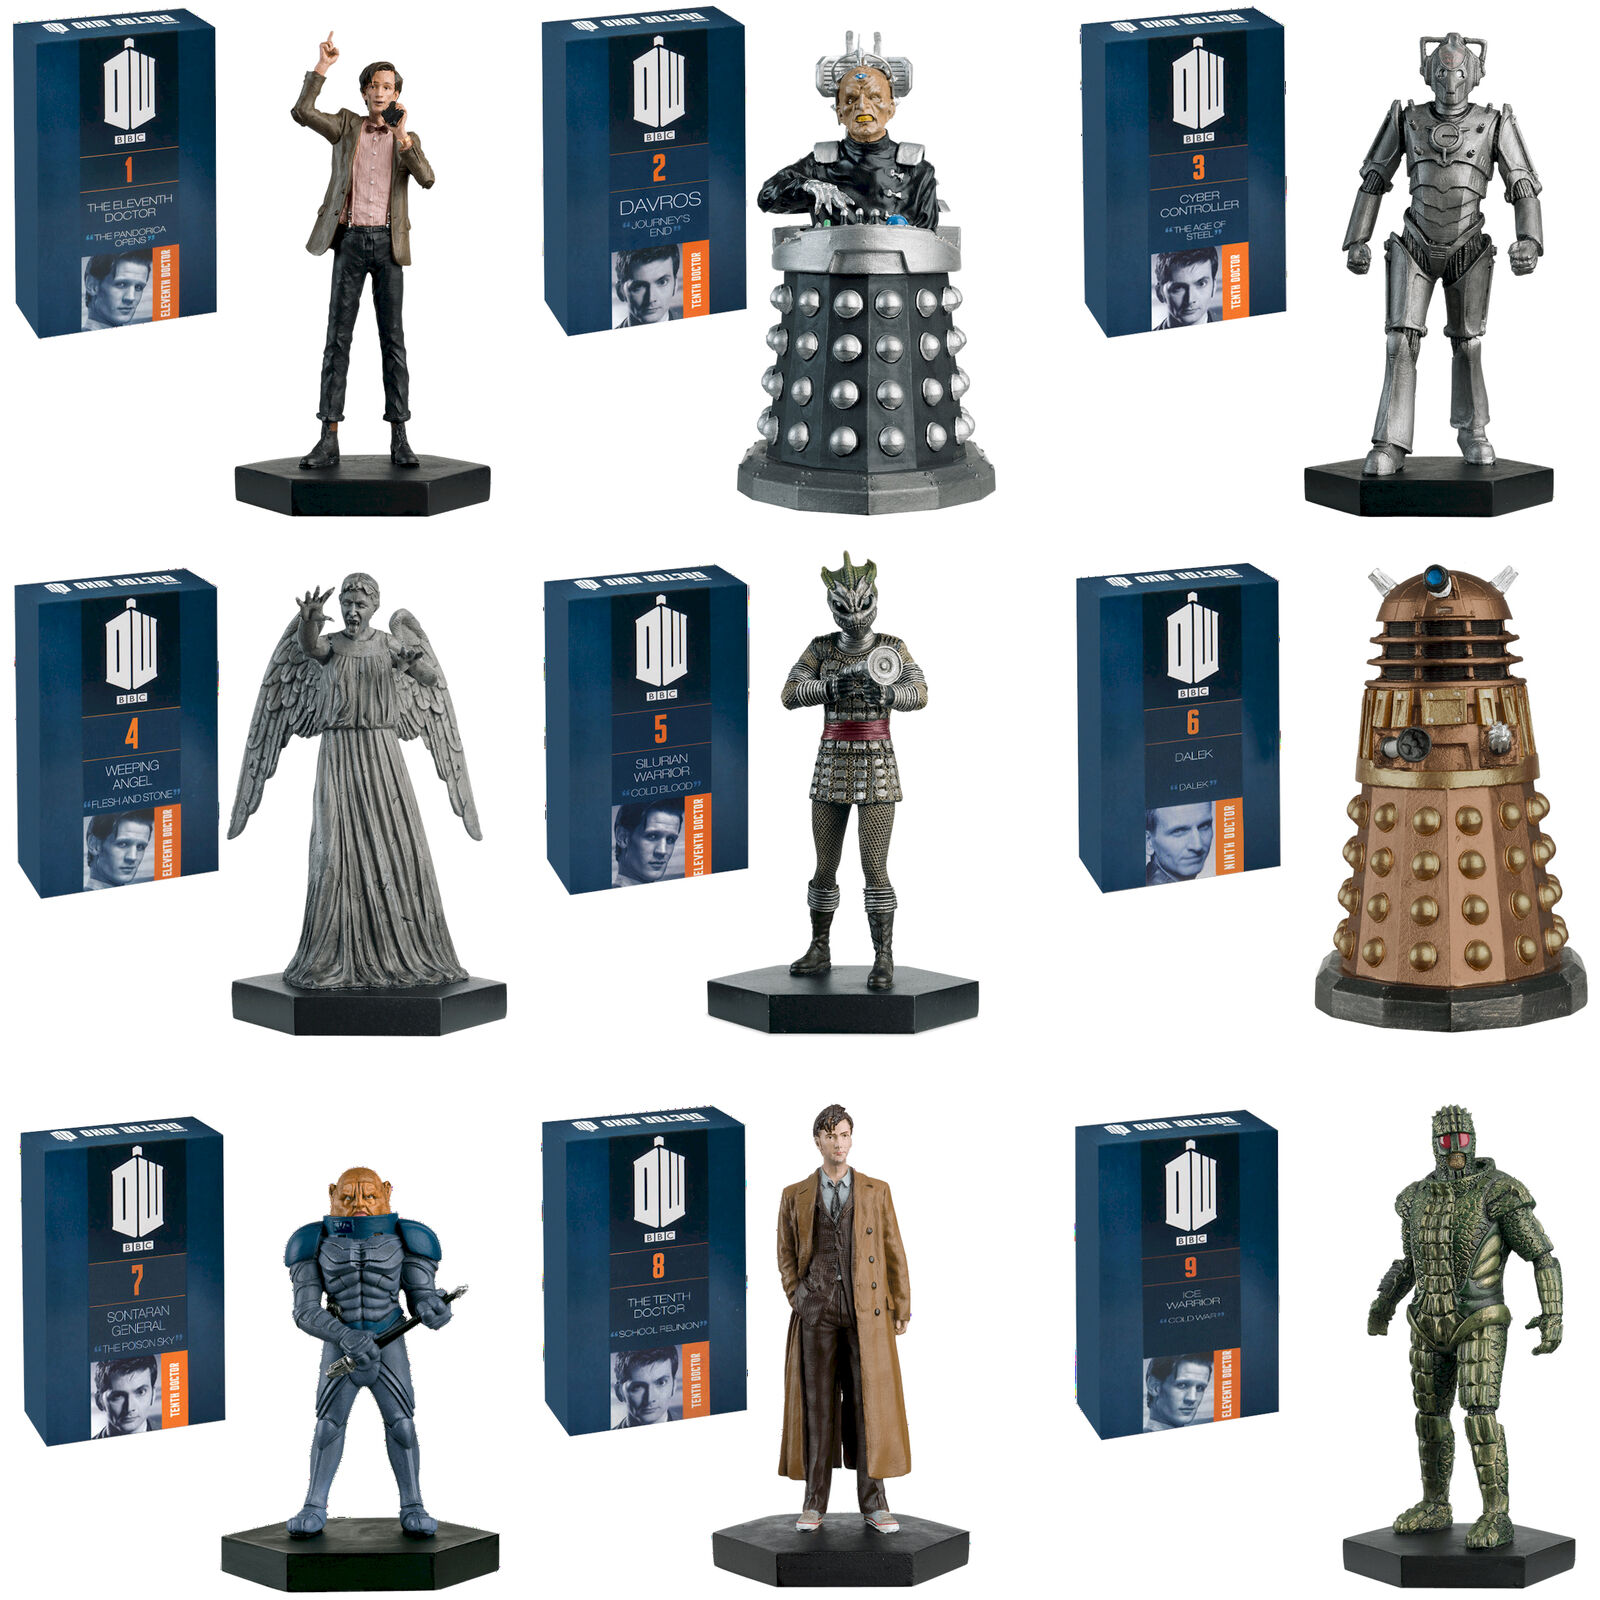 Eaglemoss Doctor Who Figurine Collection